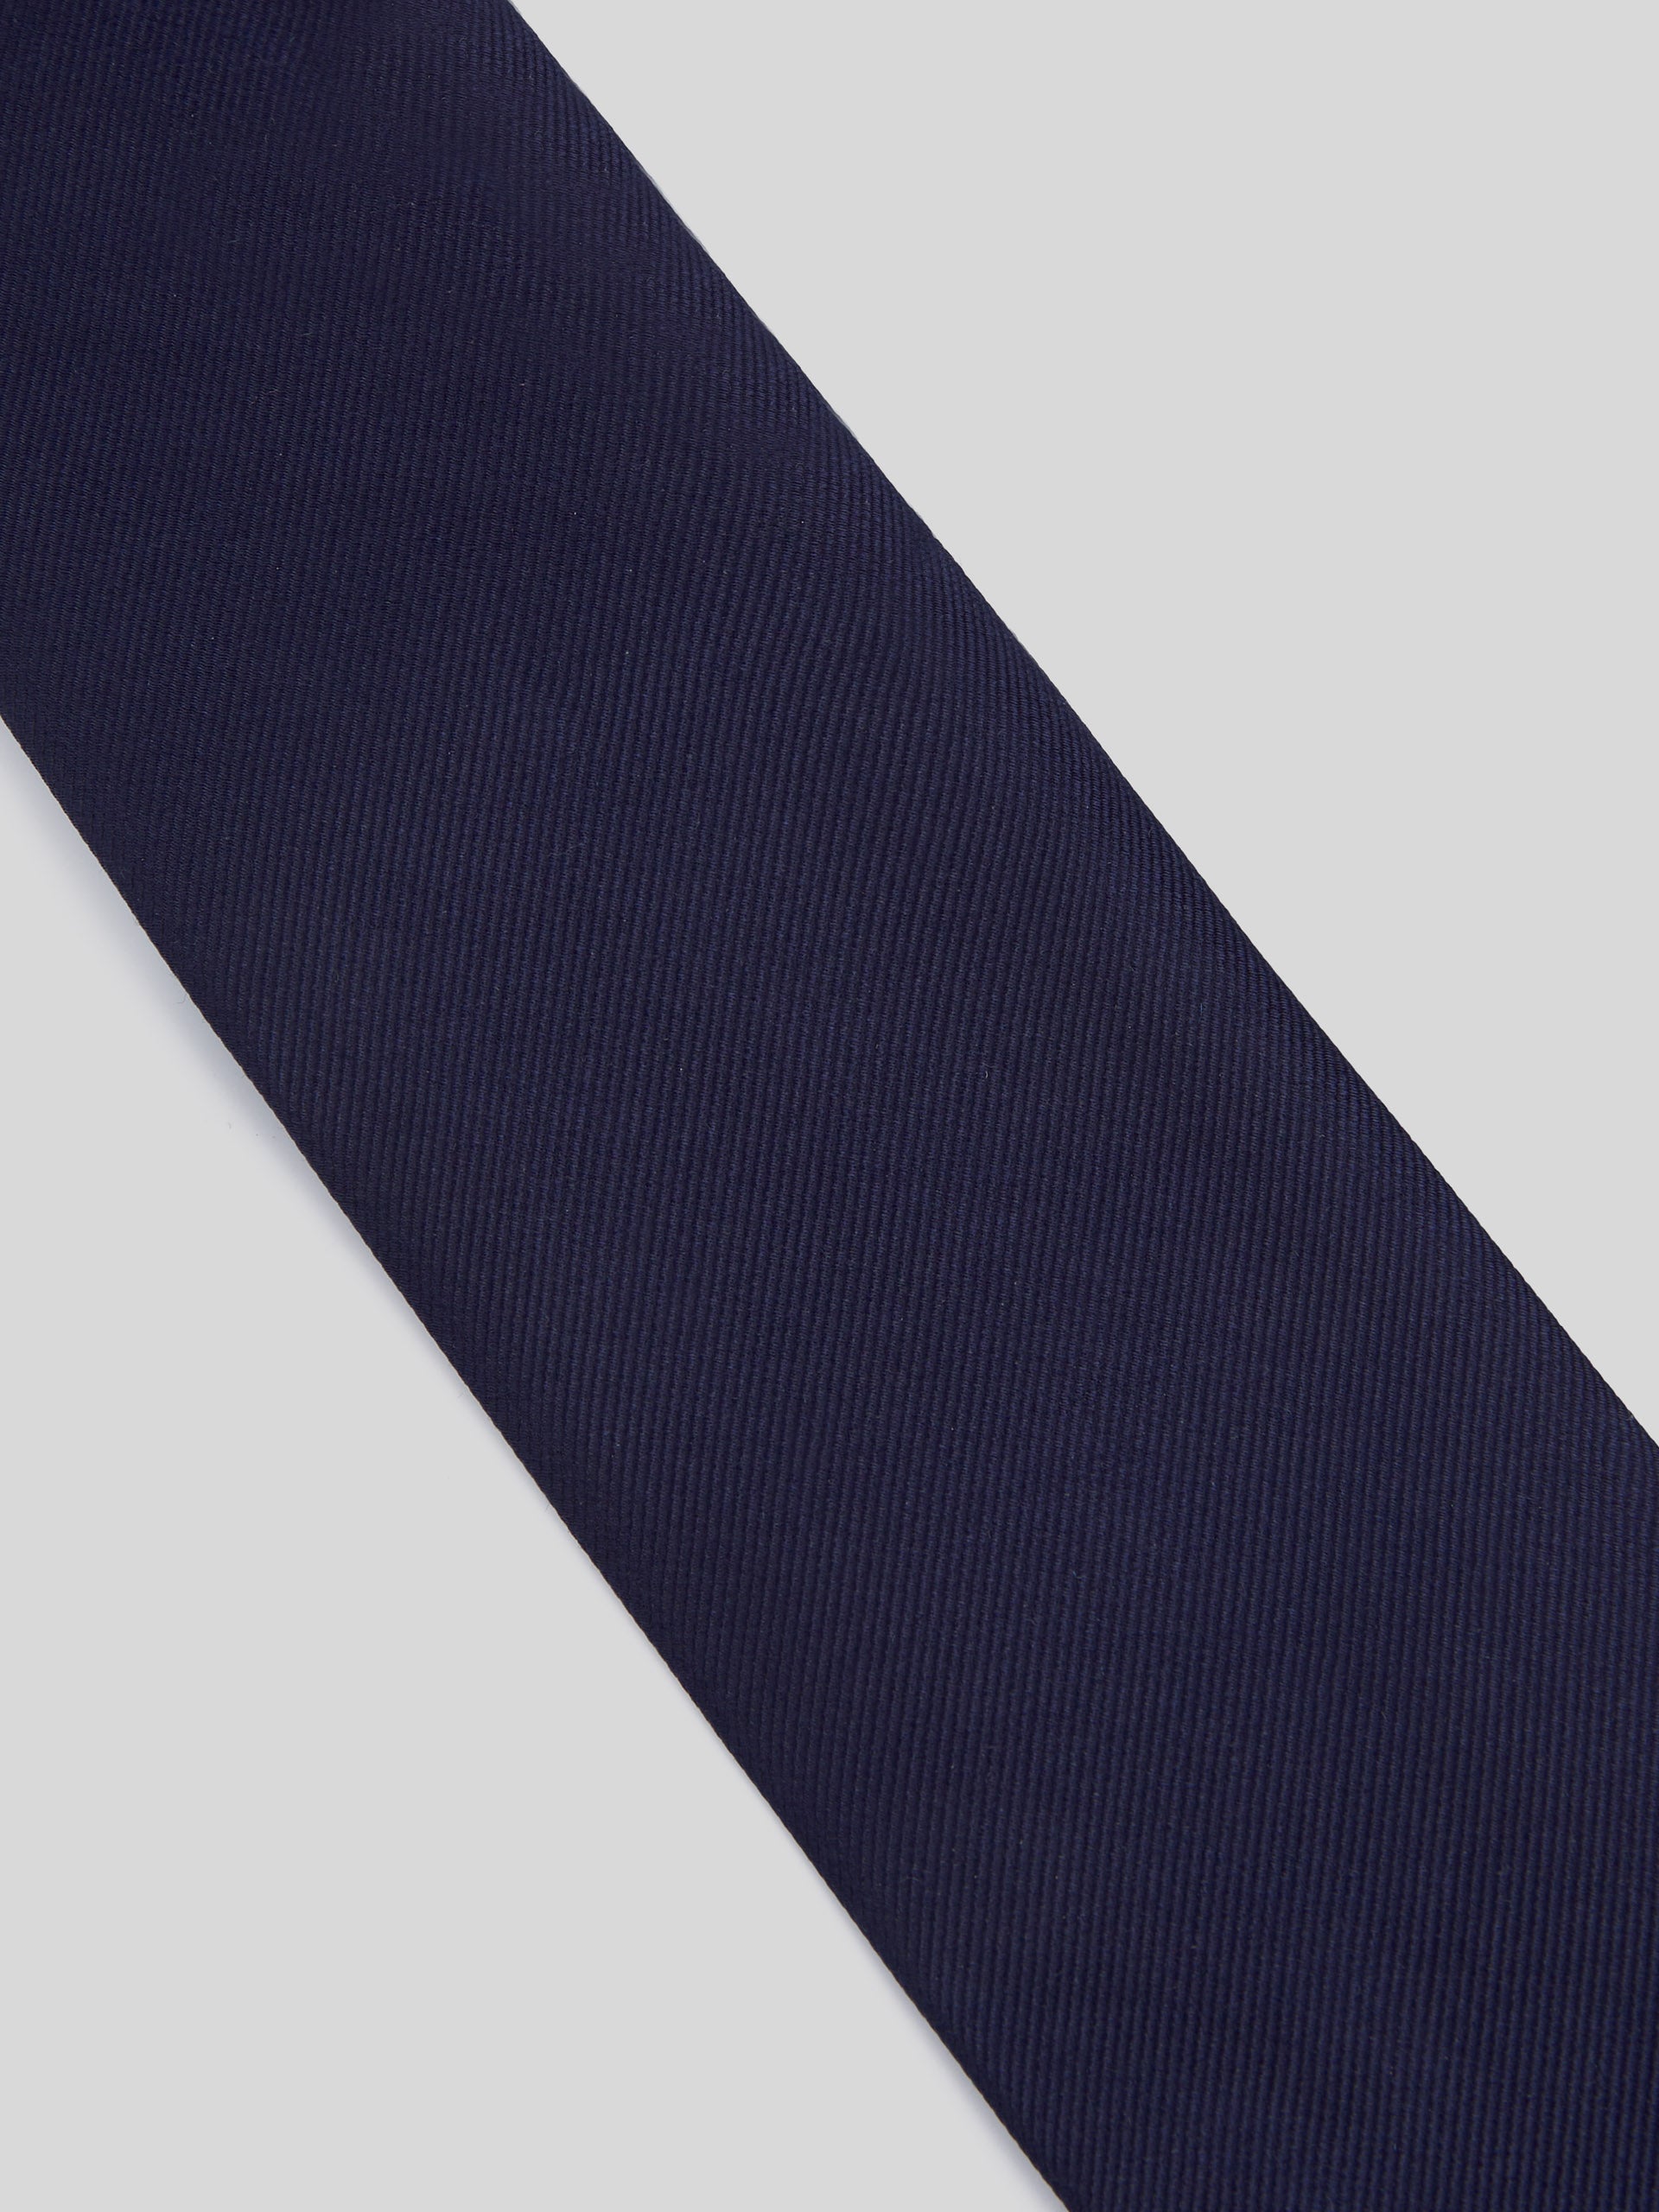 Corbata silbon lisa azul marino